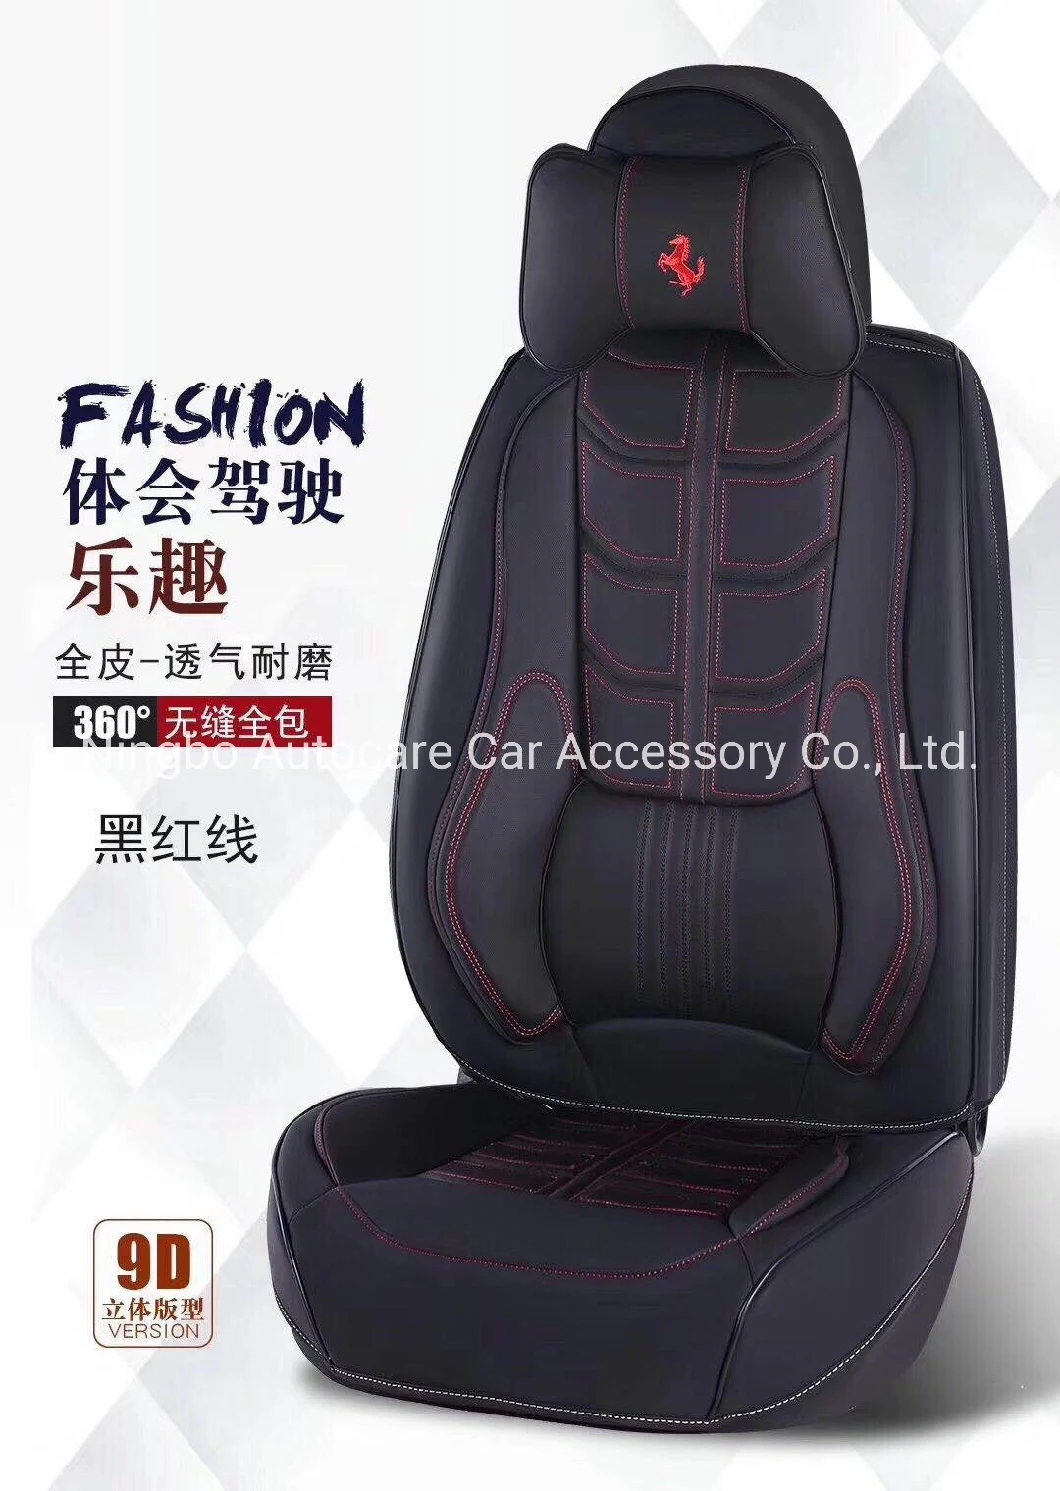 Auto Car Accessory Car Decoration High Quality Car Seat Cover Universal Auto Car Seat Cover